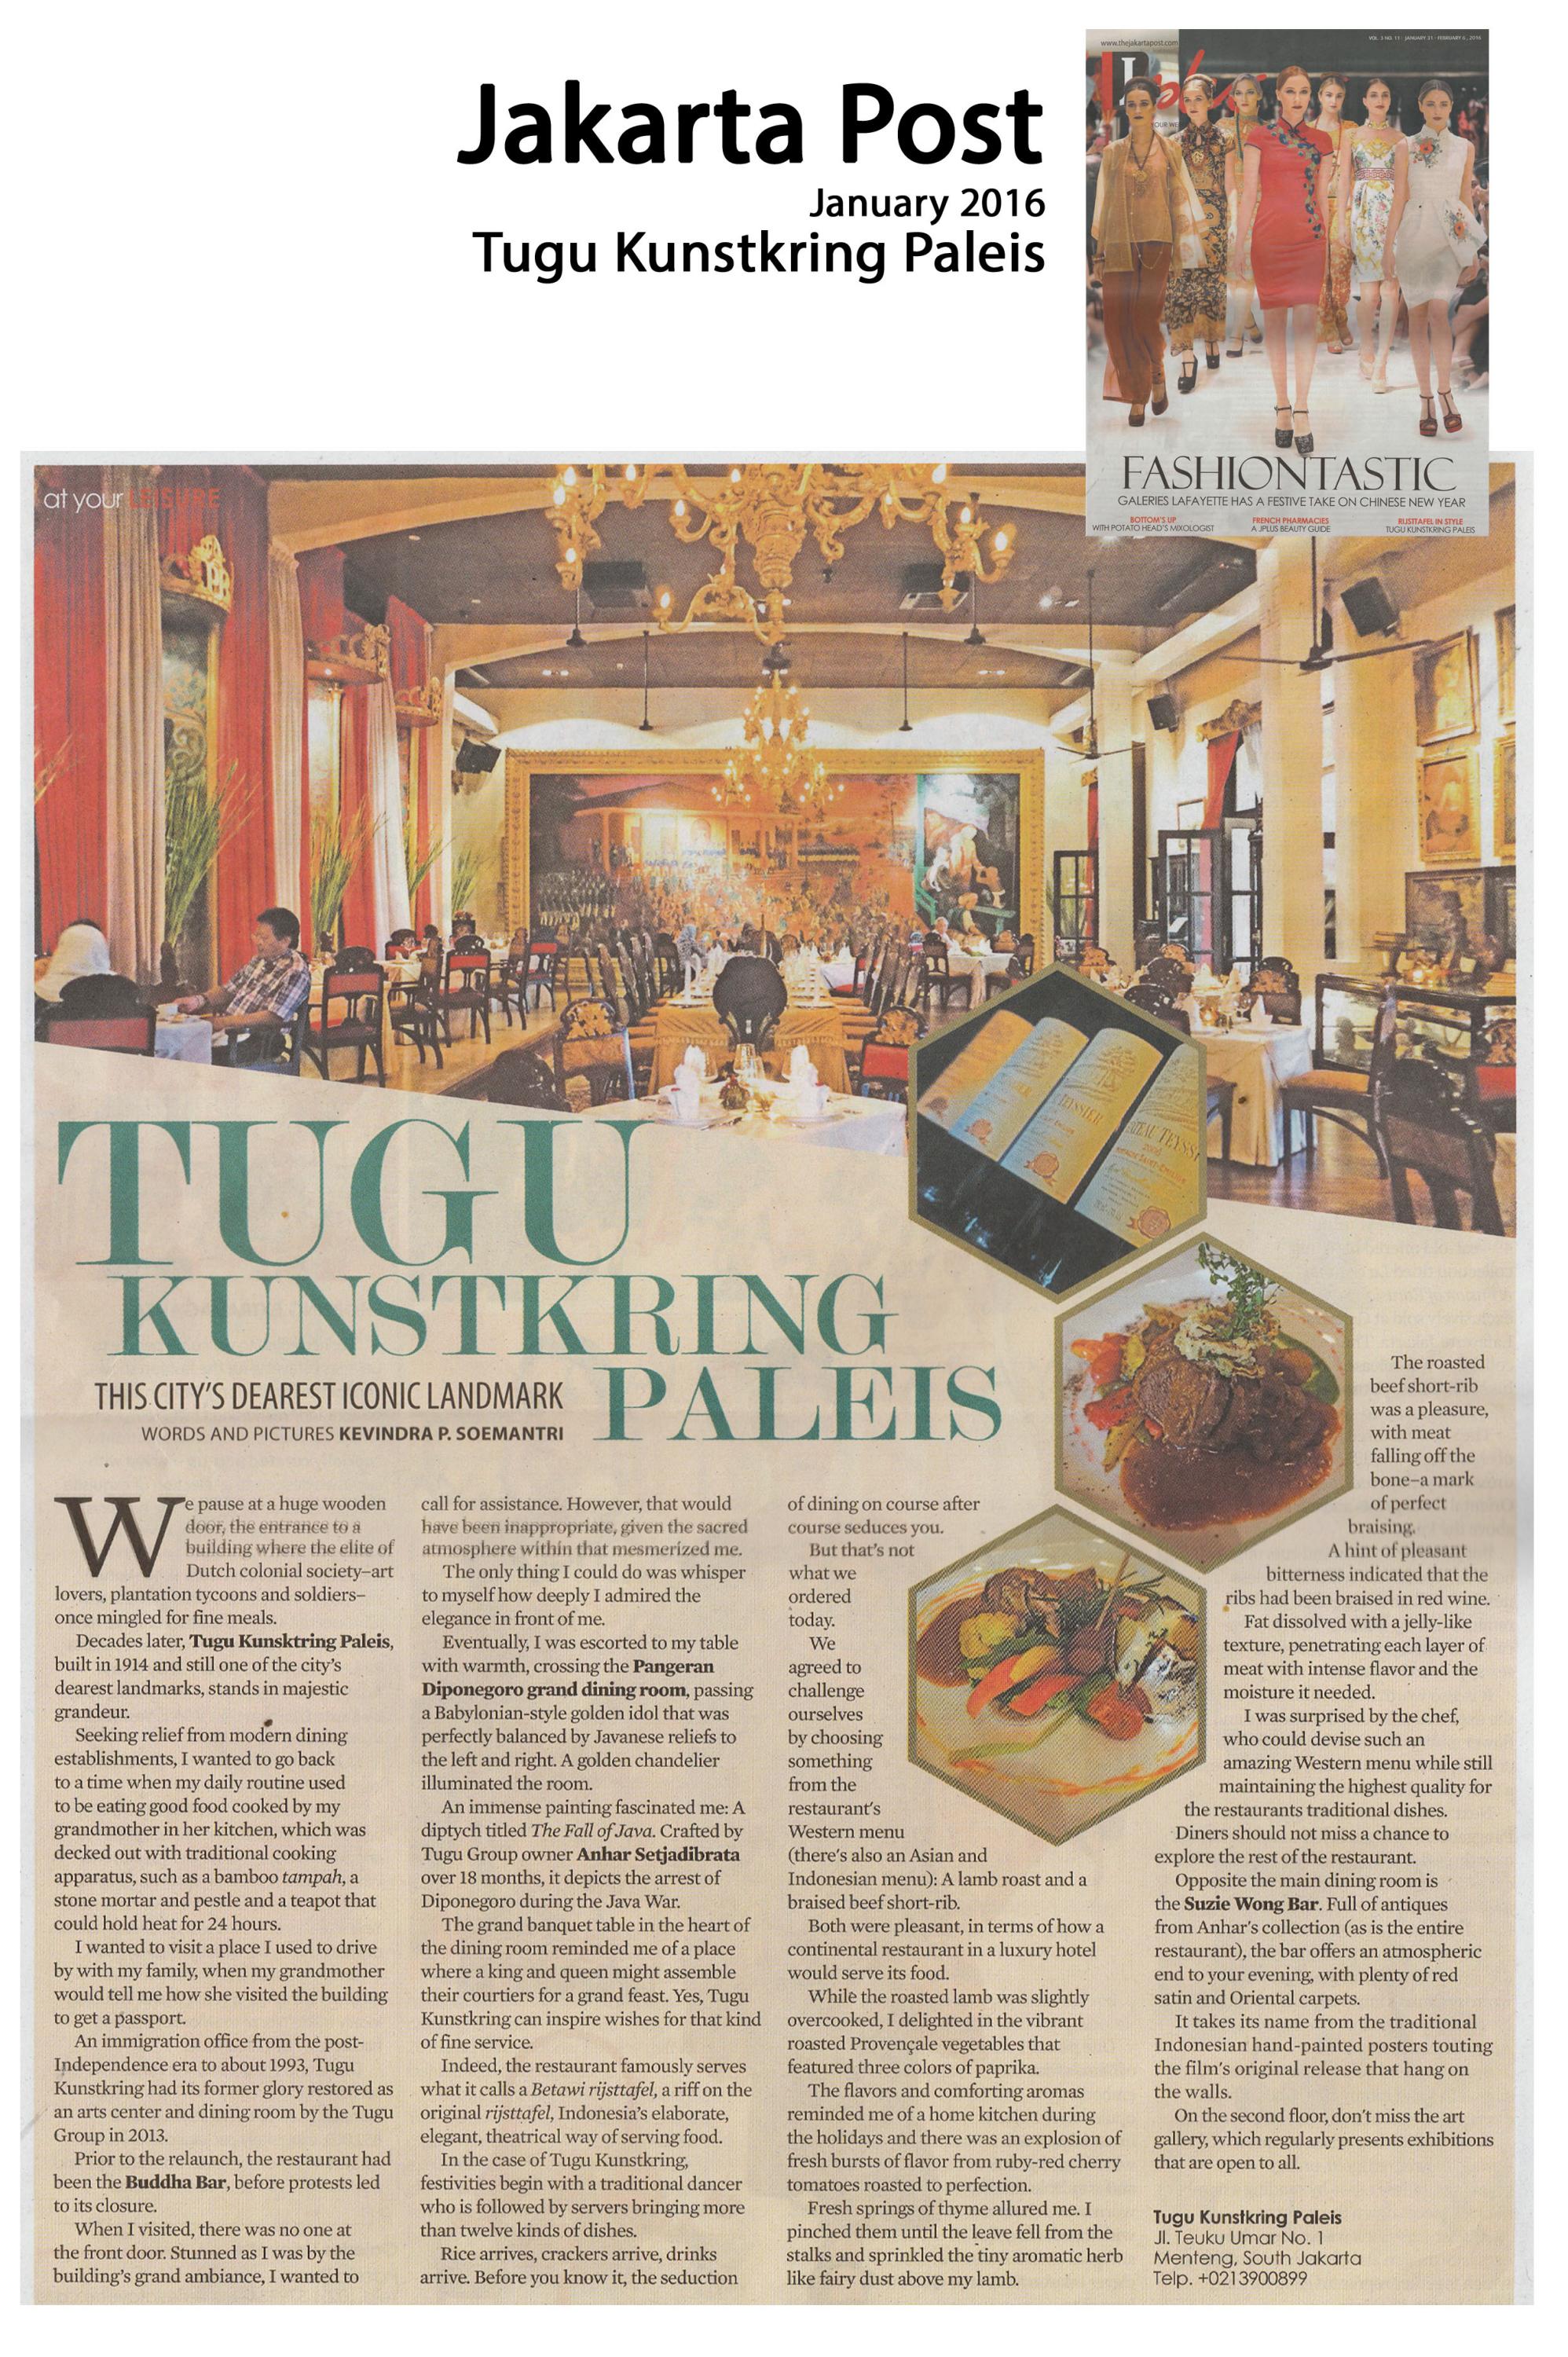 Tugu Kunstkring Paleis - Jakarta Post January 2016 - Tugu Hotels